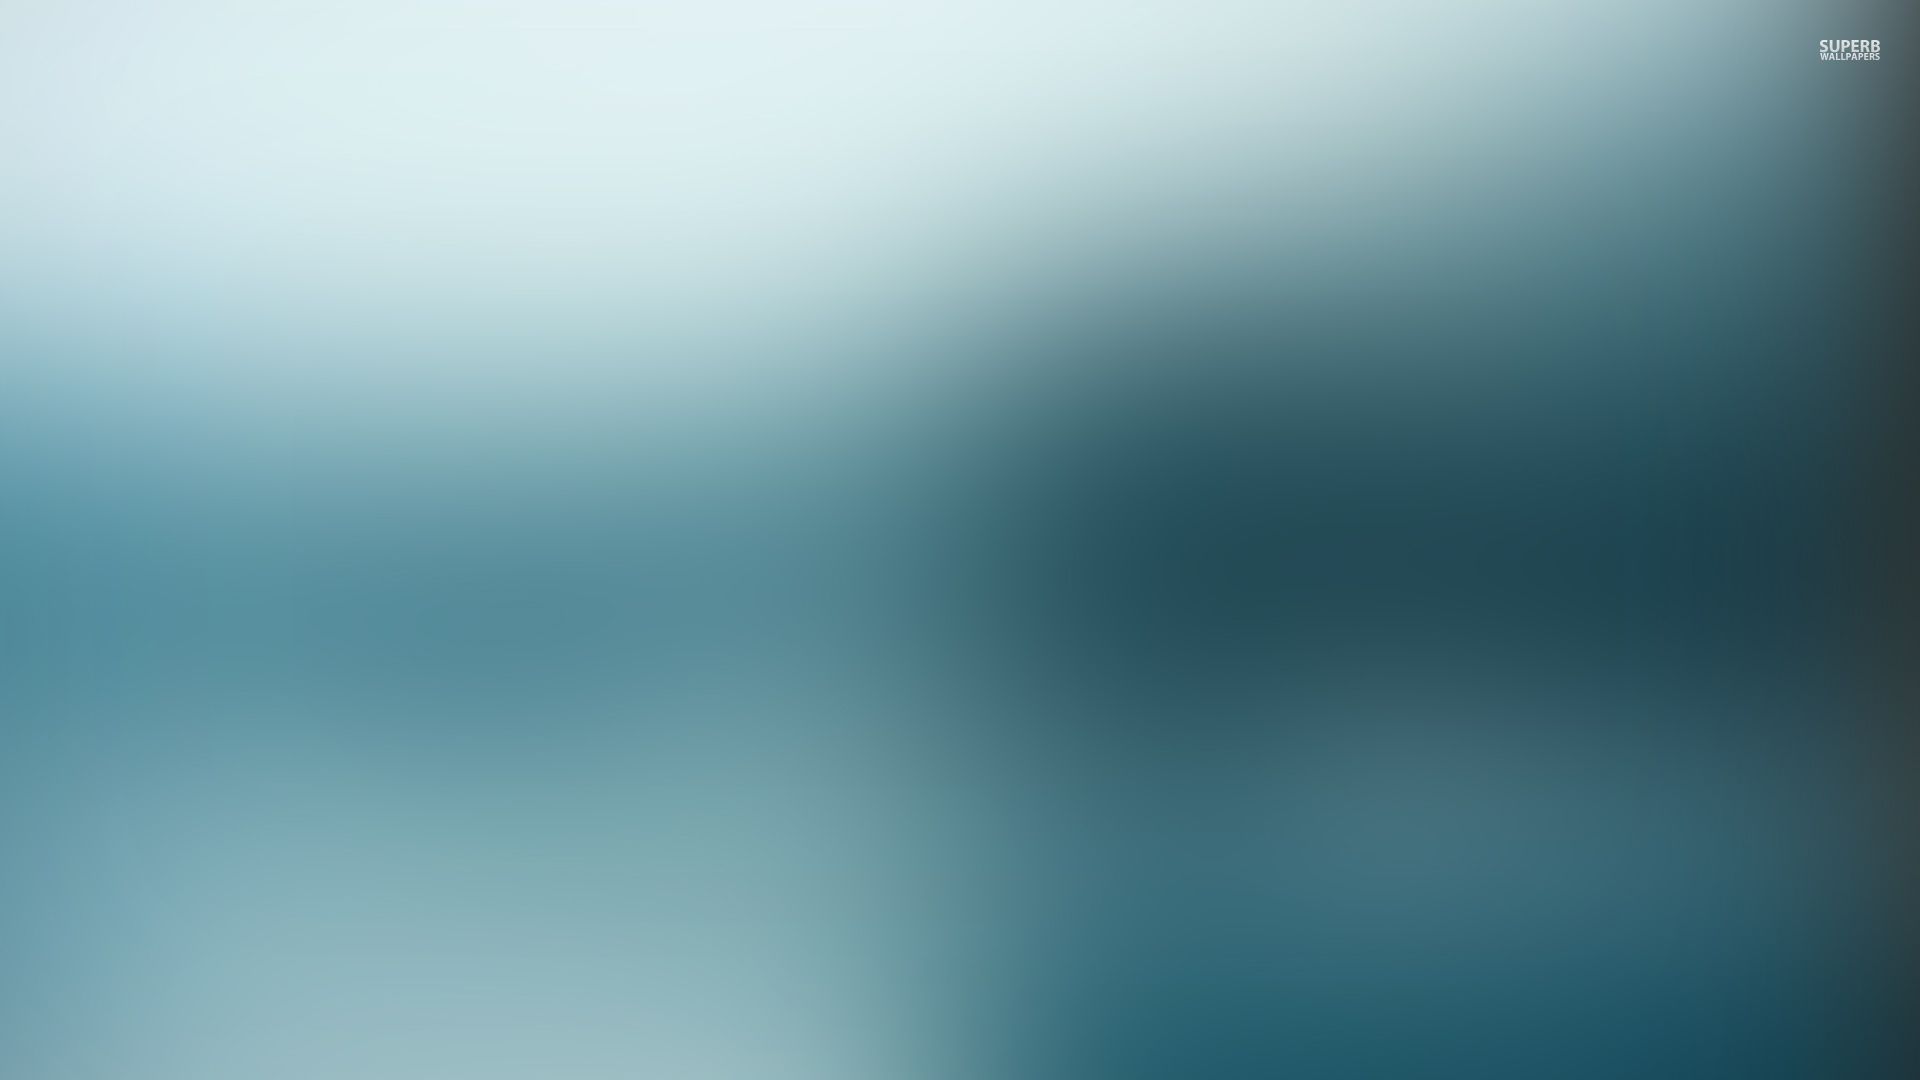 Turquoise Blur Wallpaper - Fondo azul gris borroso (# 81806